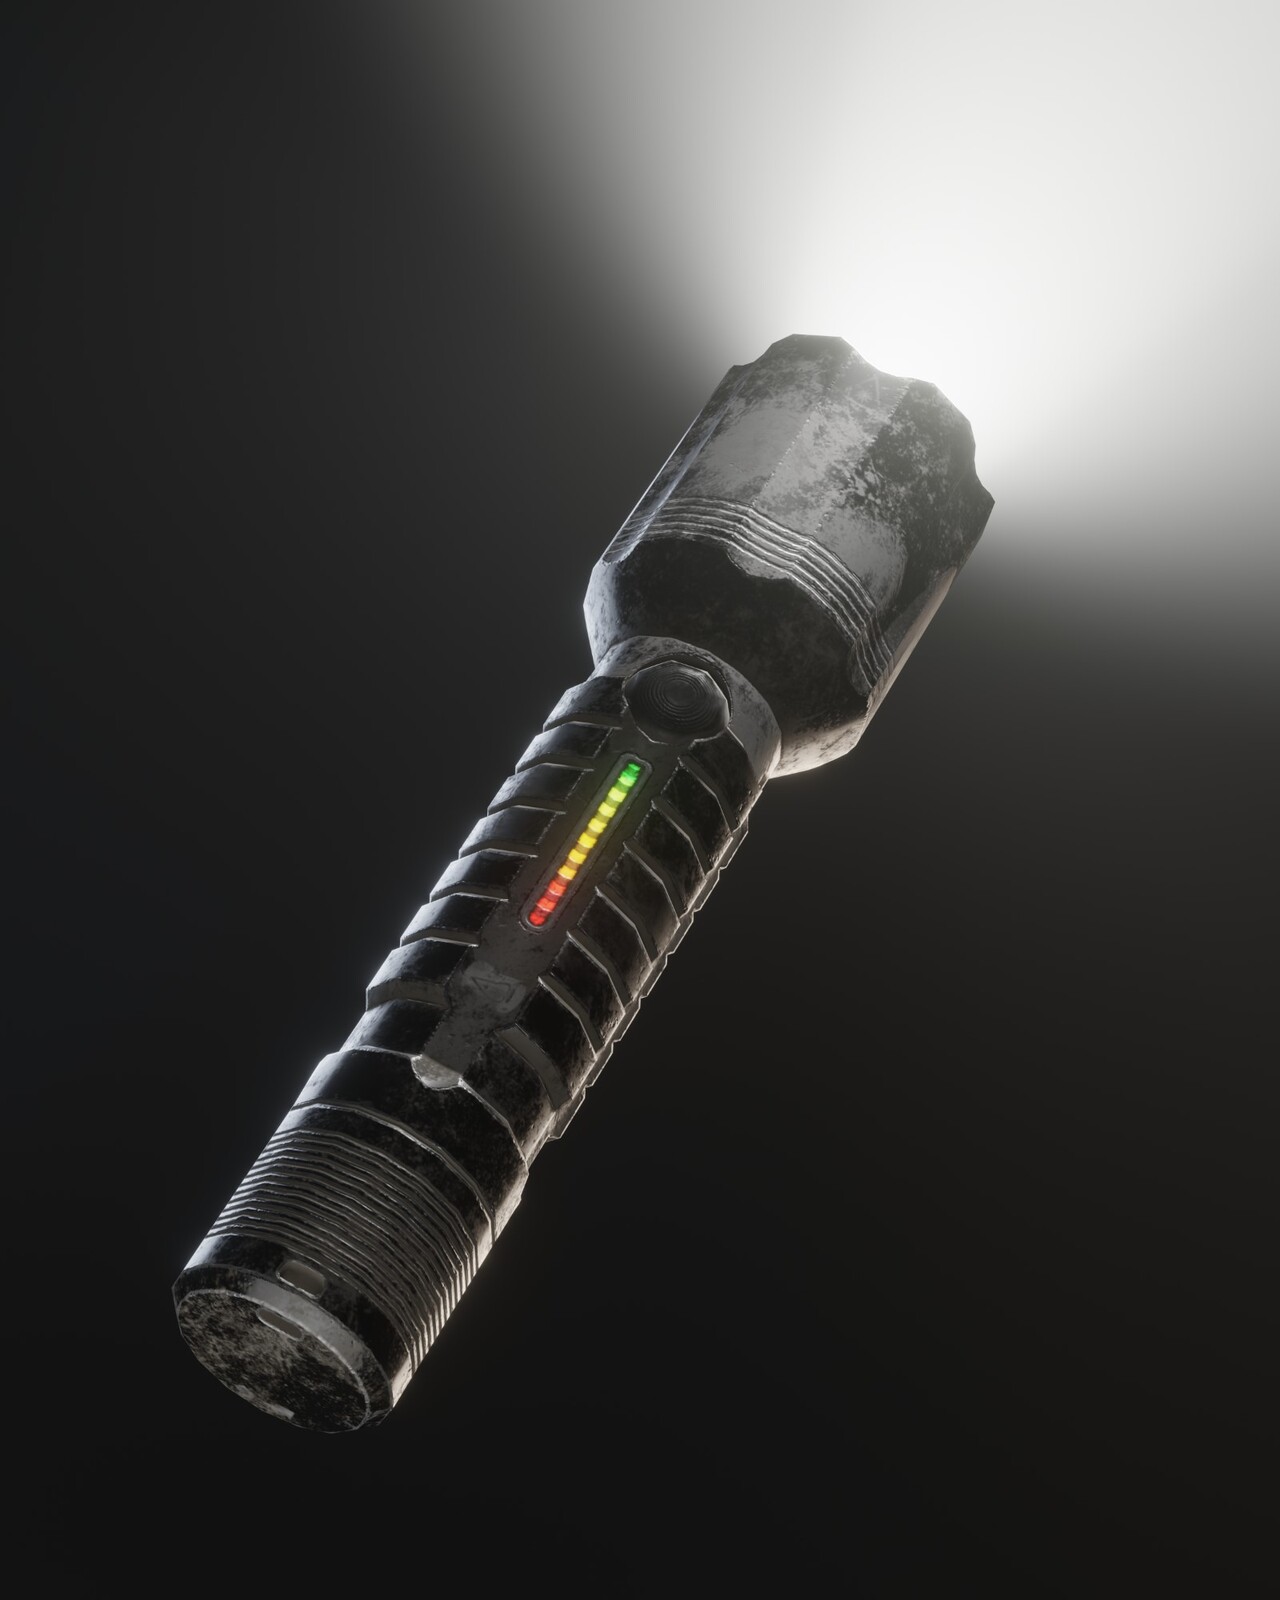 Somewhat-scifi flashlight